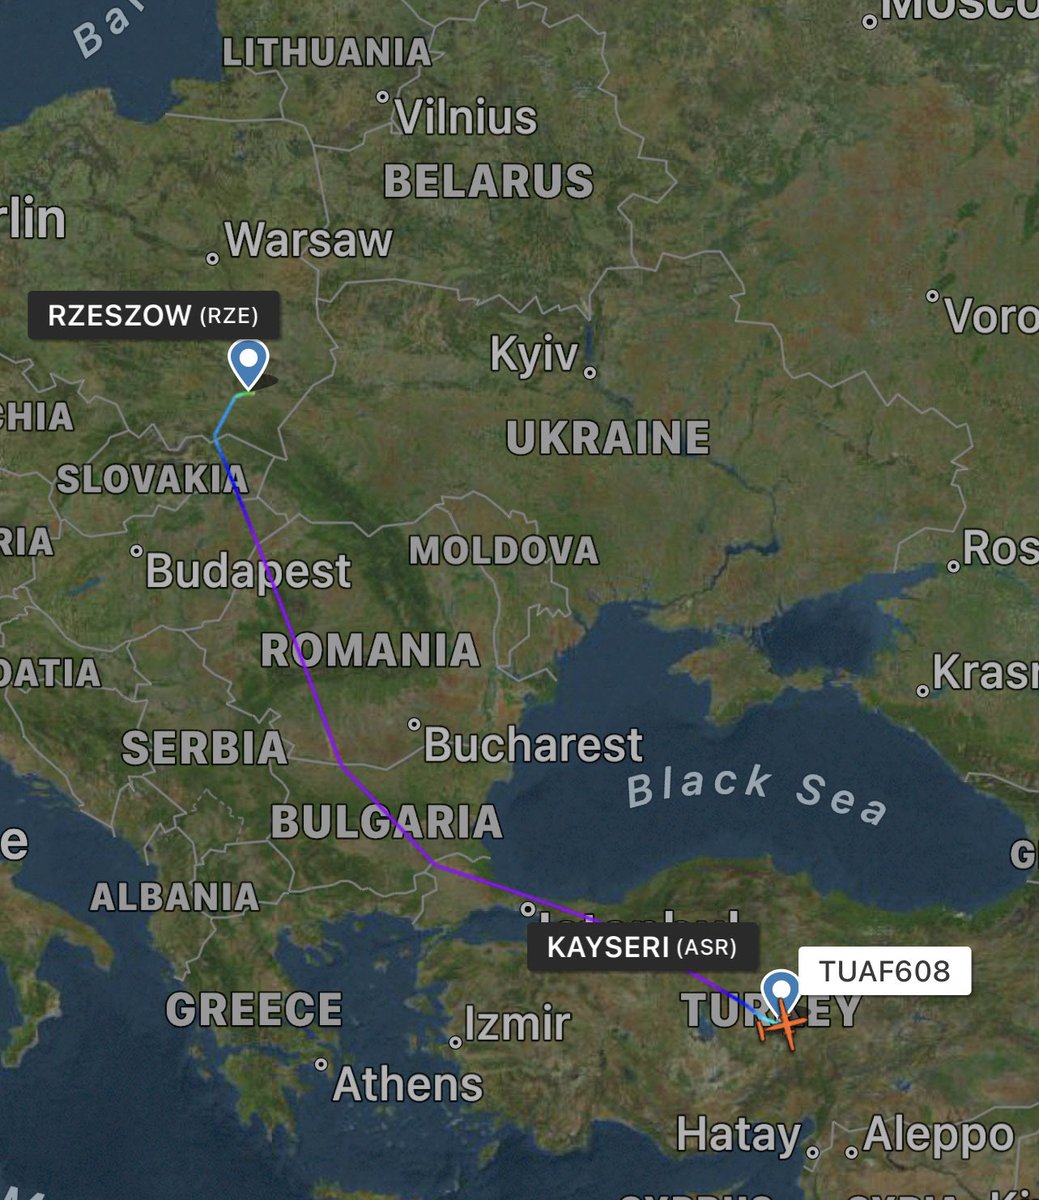 Turkish aid to Ukraine: Turkish Air Force 221st squadron A400M heavy transport plane 18-0094 flew from Rzeszów–Jasionka airfield to Tur AFB Erkilet. Landing now